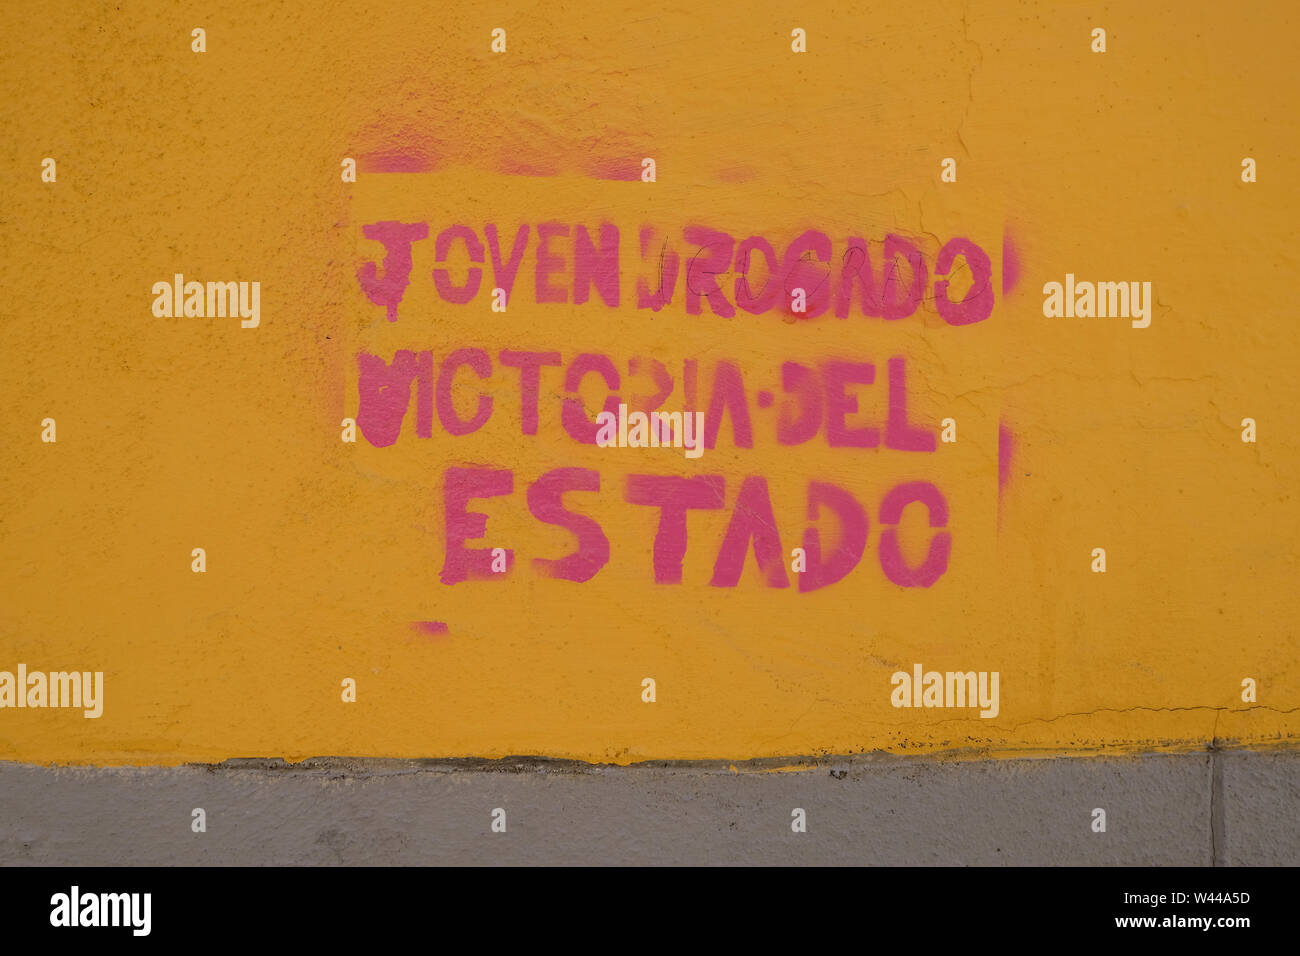 Joven drogado, Victoria del estado (jeunes drogués, victoire pour l'état) ; graffiti politique en Espagne en commentant l'abus des drogues chez les jeunes et de l'état. Banque D'Images